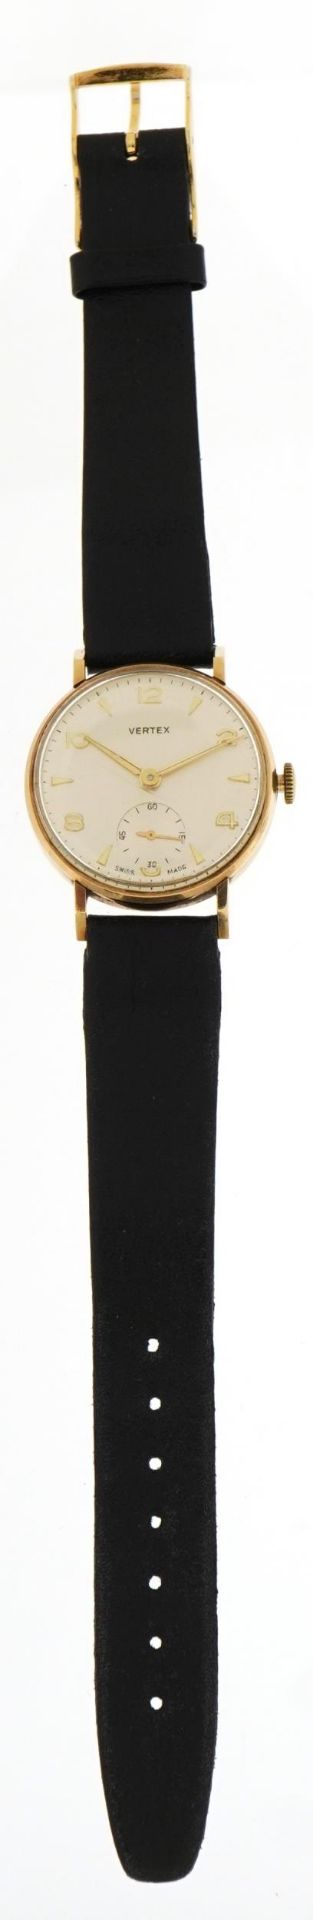 Vertex, vintage gentlemen's 9ct gold manual wind wristwatch, the case 30mm in diameter, total 31.9g - Image 2 of 4